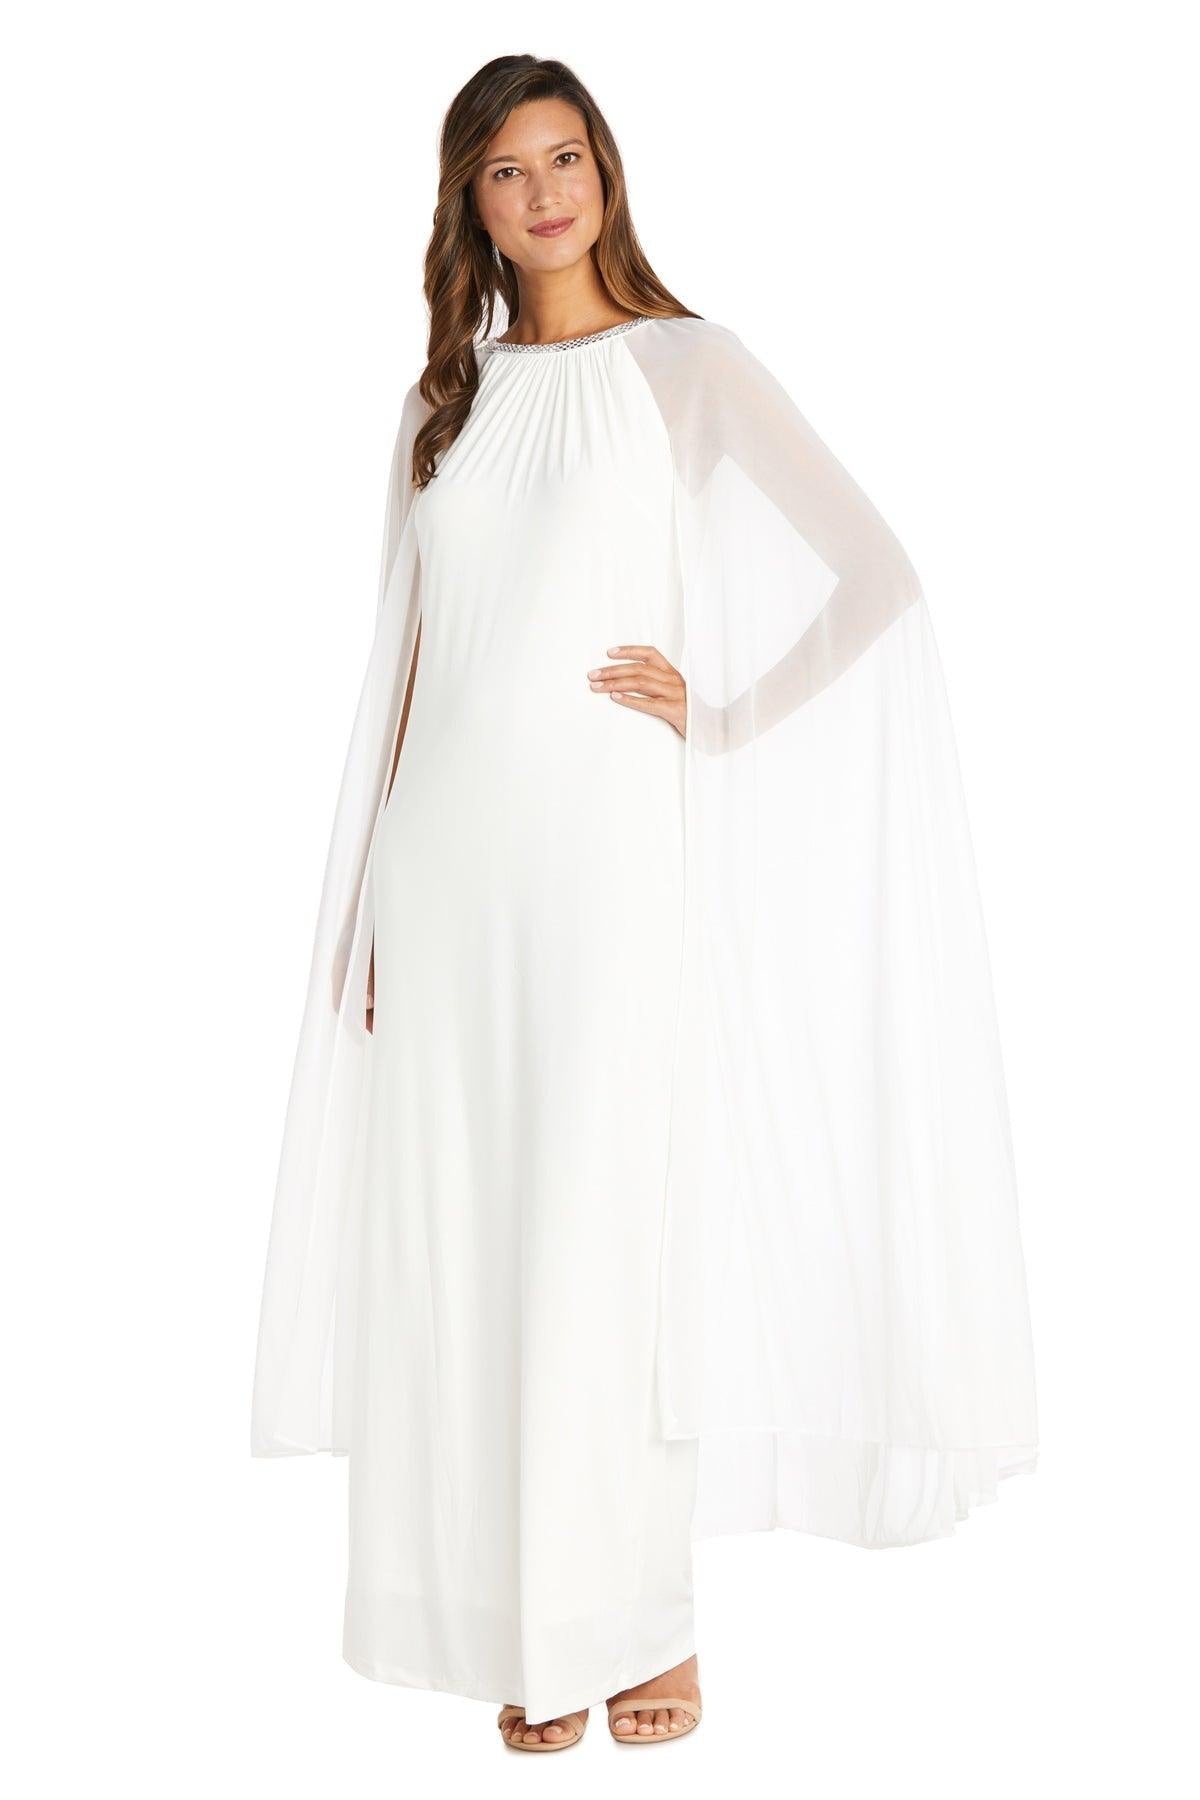 R&M Richards Plus Size Long Formal Cape Gown White